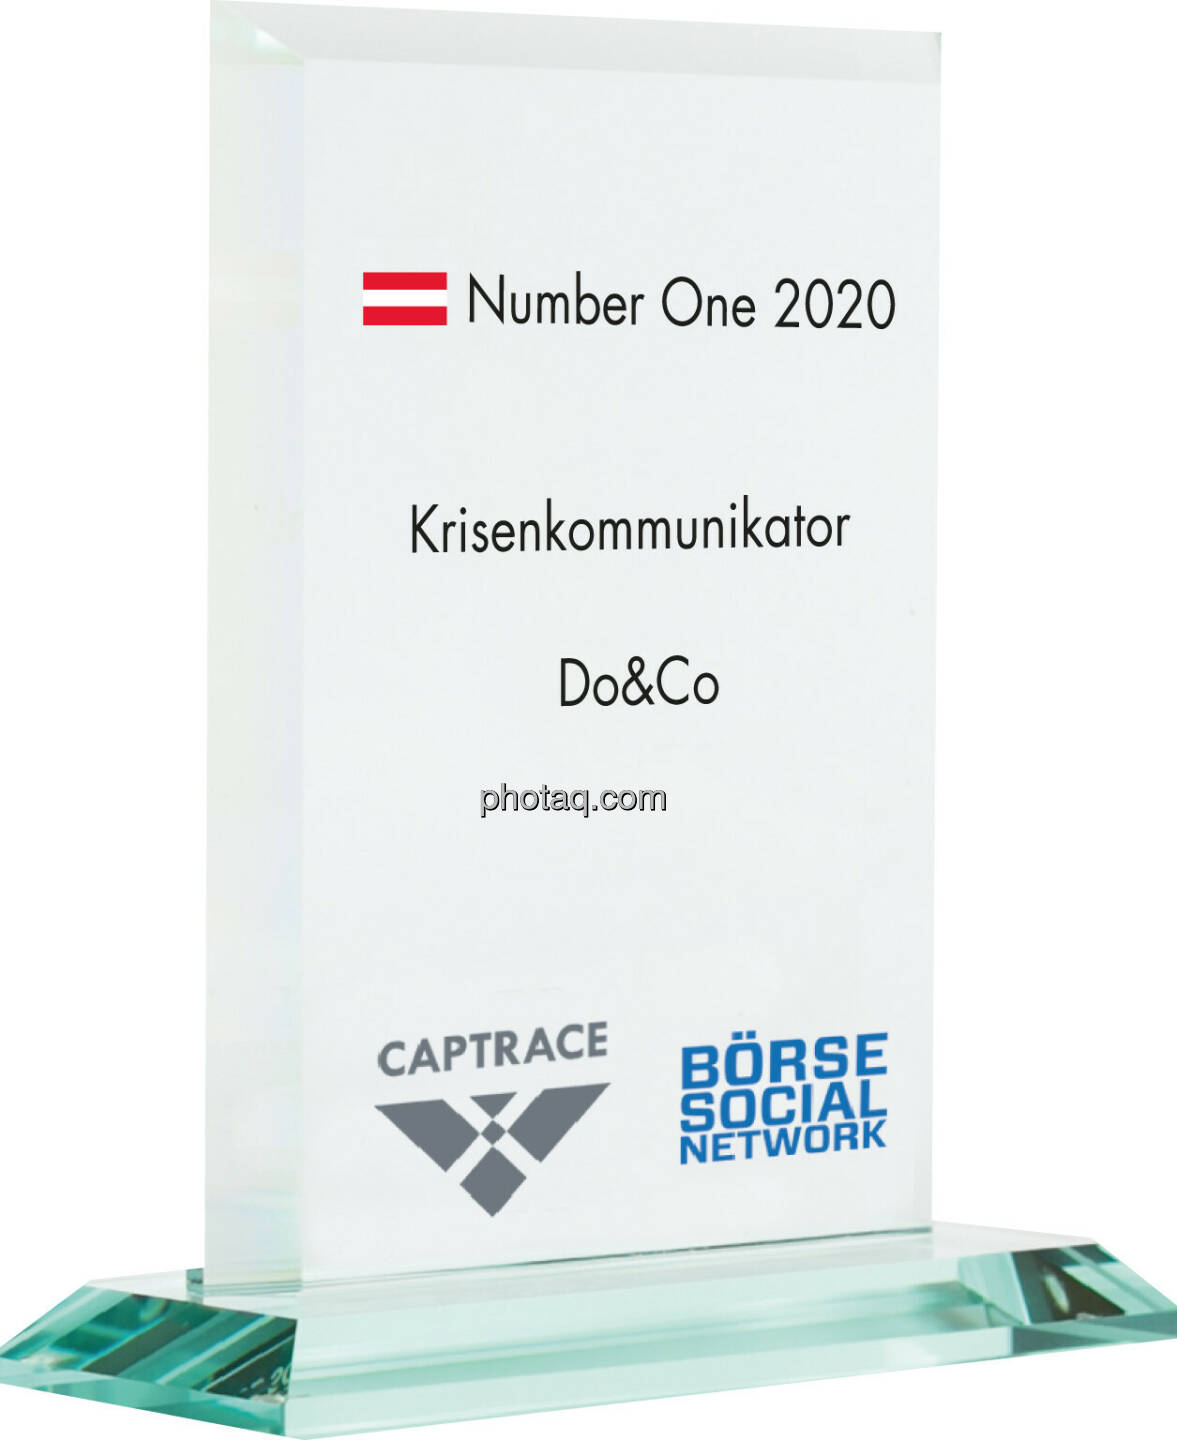 Number One Awards 2020 - Krisenkommunikator Do&Co